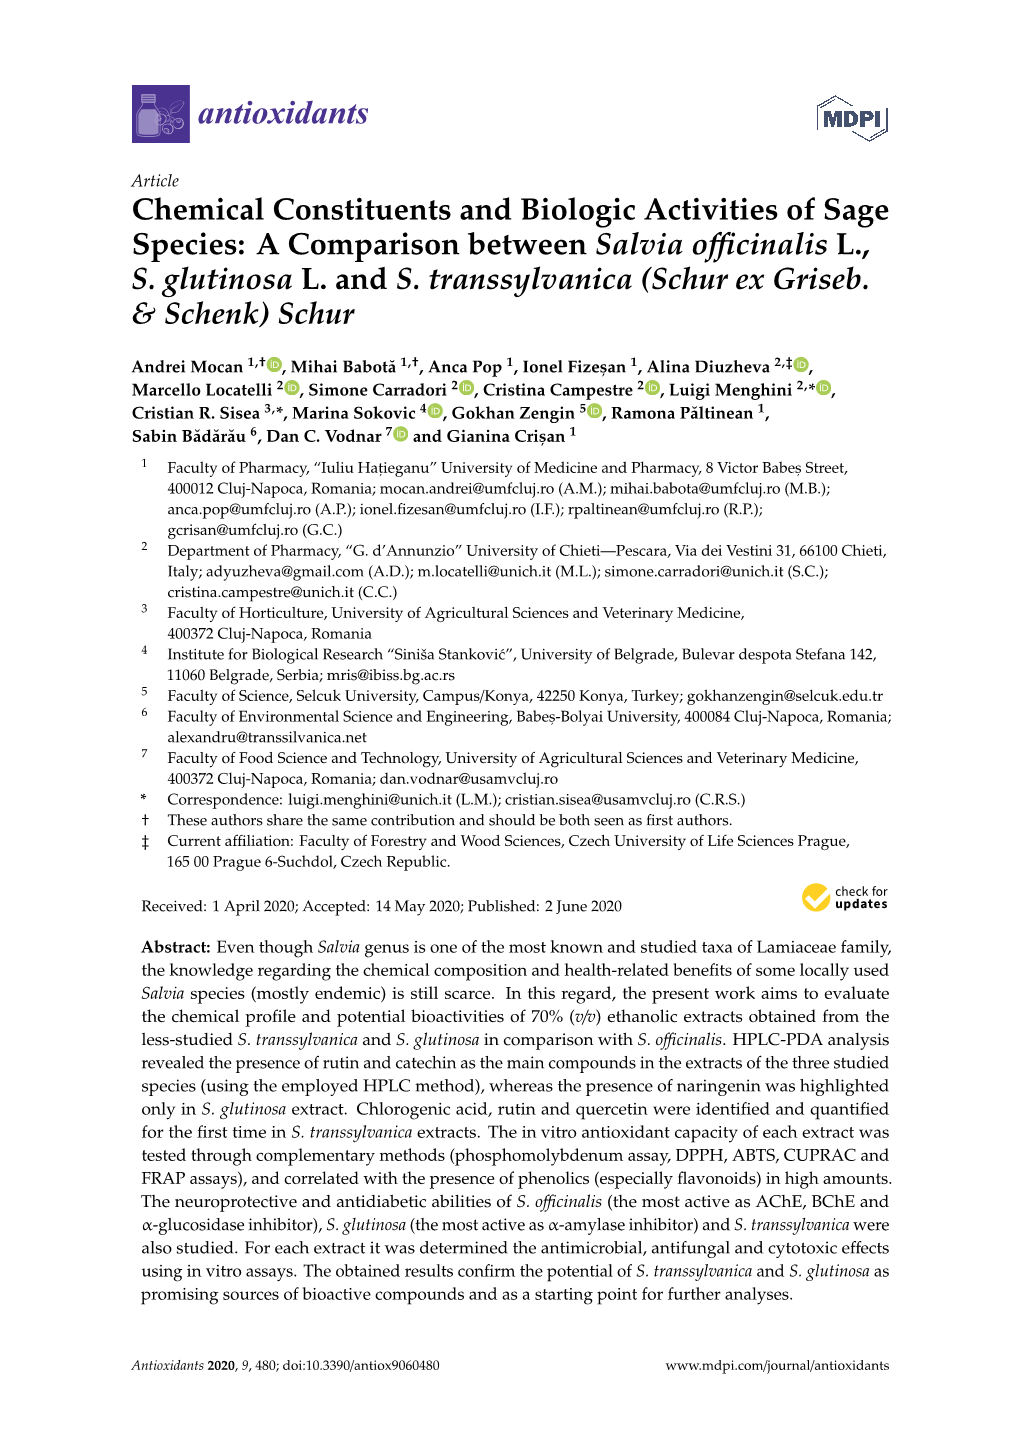 Chemical Constituents and Biologic Activities of Sage Species: a Comparison Between Salvia Officinalis L., S. Glutinosa L. and S. Transsylvanica (Schur Ex Griseb. & Schenk) Schur